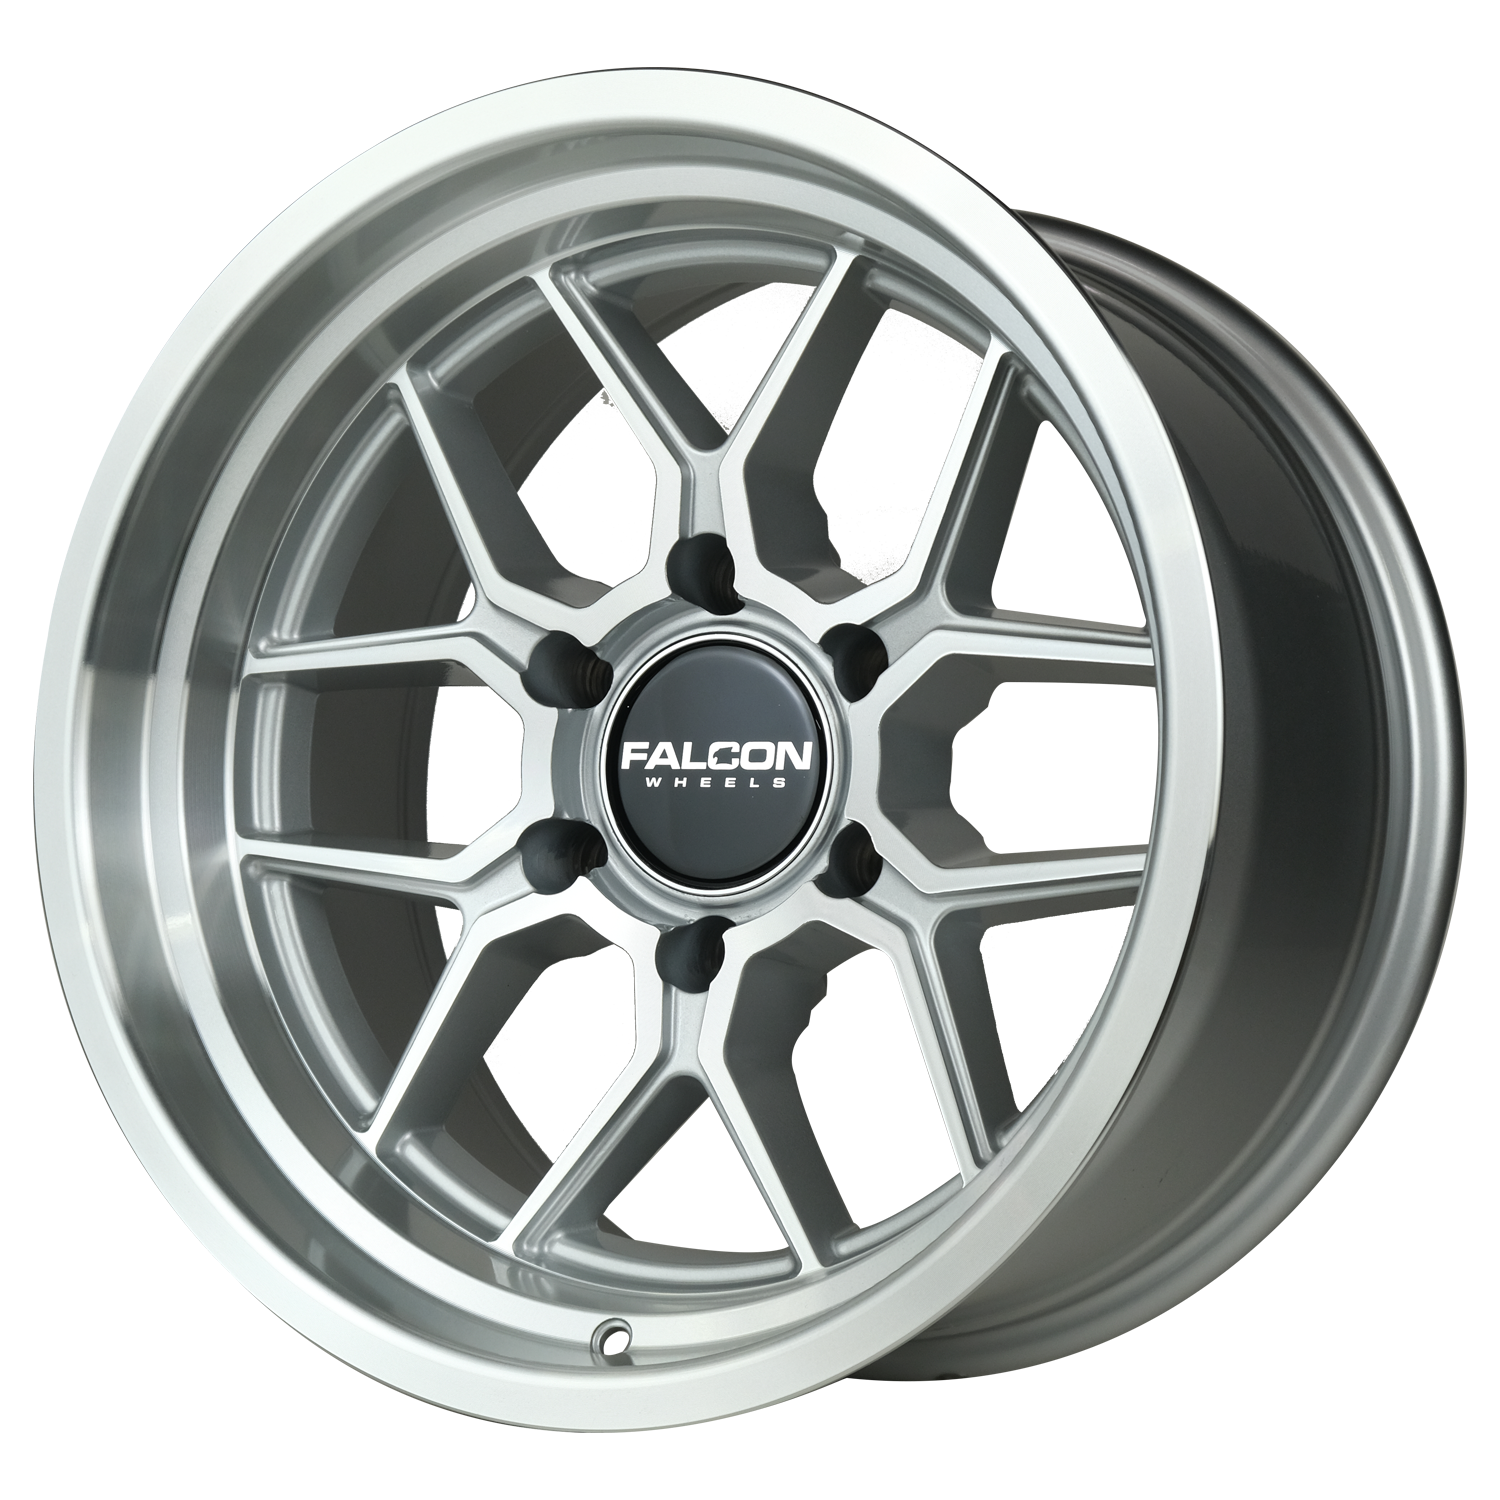 TX1 - Apollo Silver w/Machine Face & Lip - Premium Wheels from Falcon Off-Road Wheels - Just $310! Shop now at Falcon Off-Road Wheels 